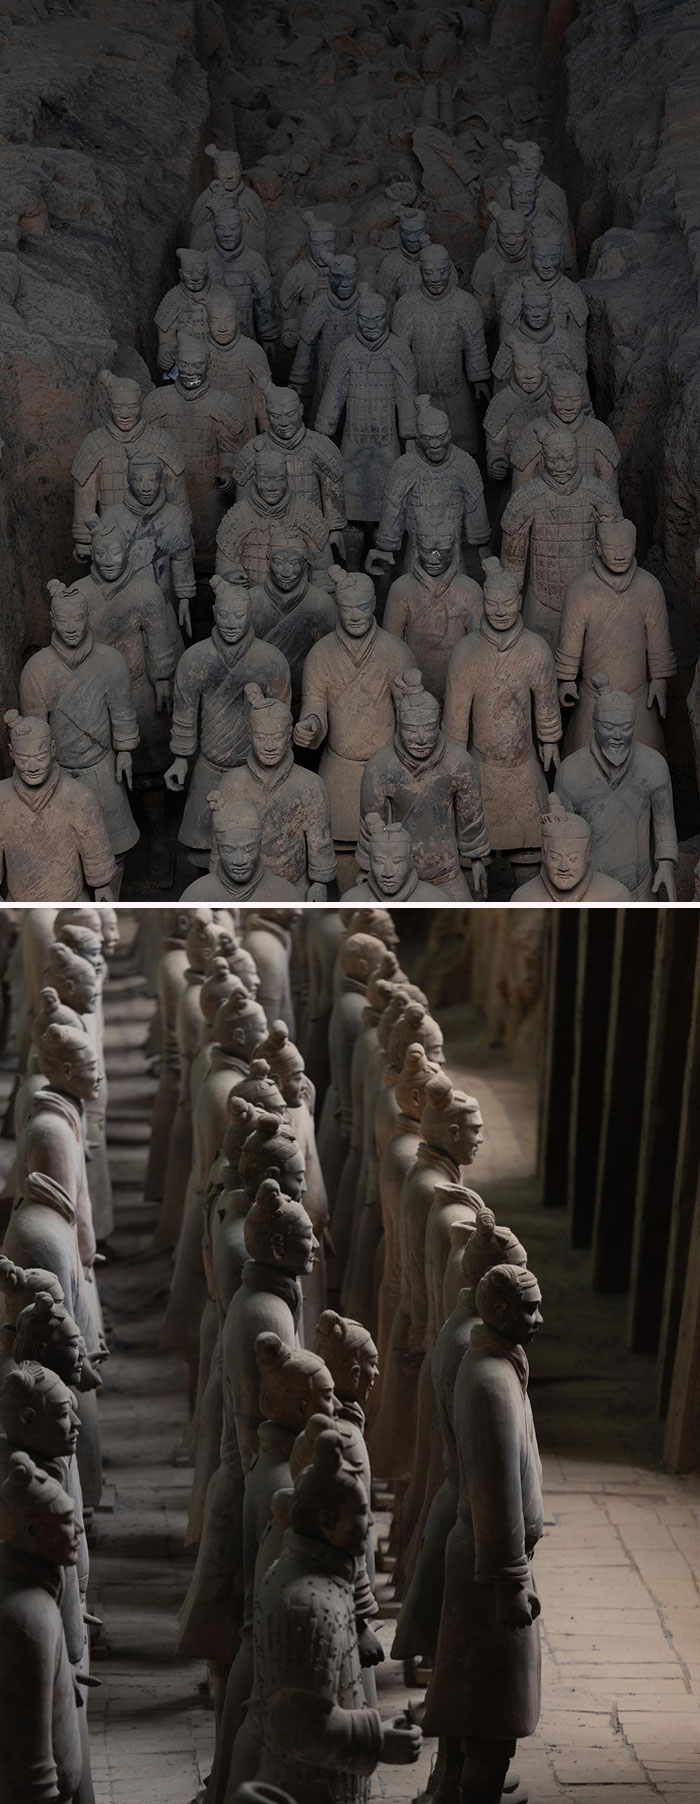 Terracotta Army In Xian, China